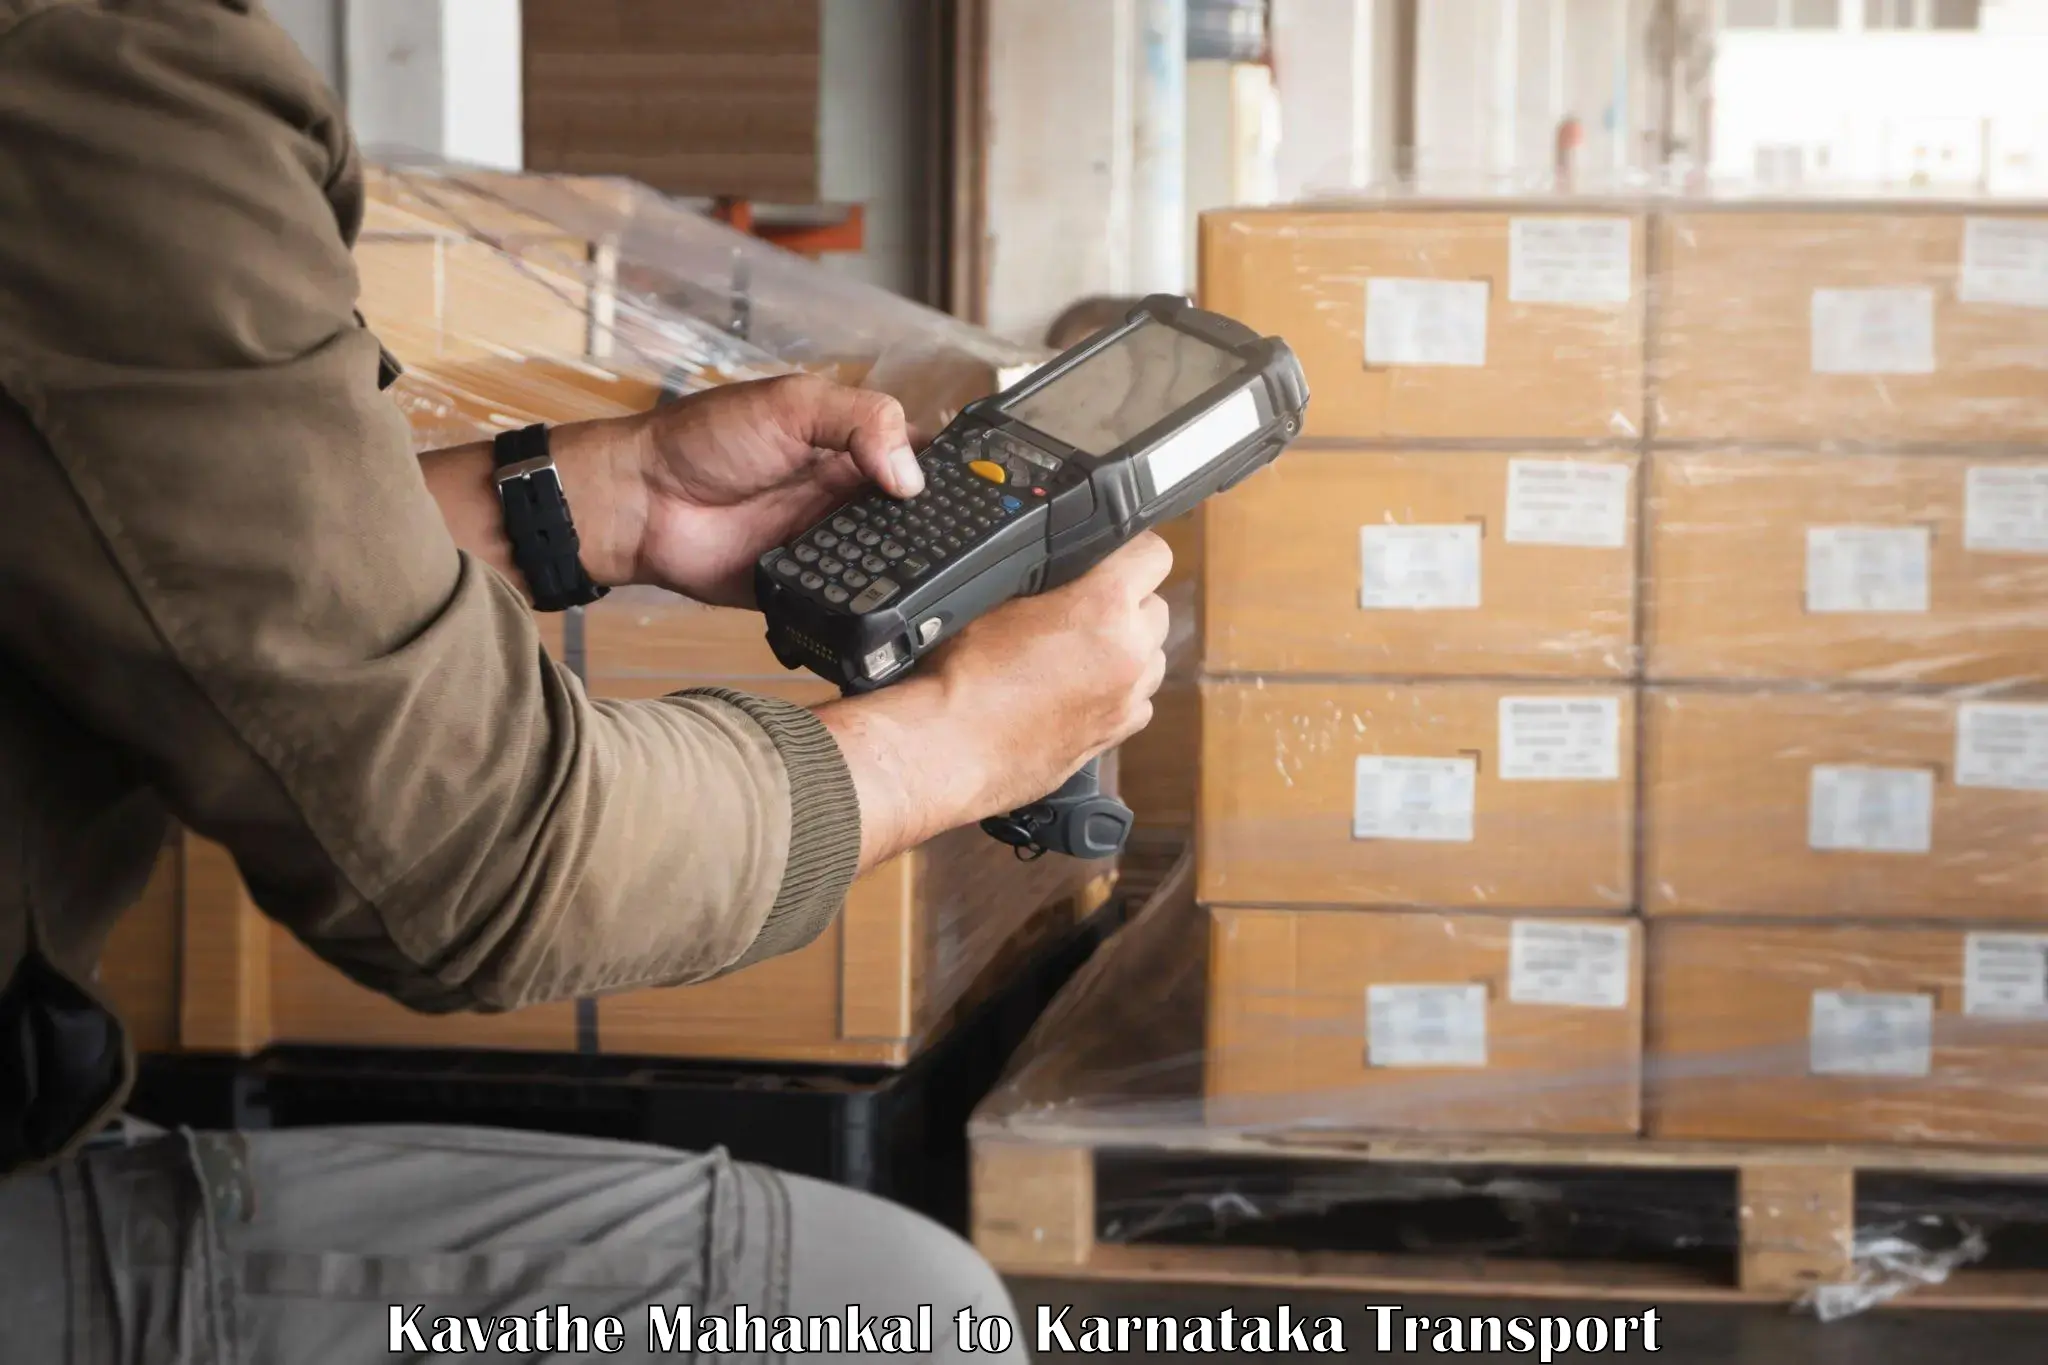 Goods delivery service Kavathe Mahankal to Harpanahalli